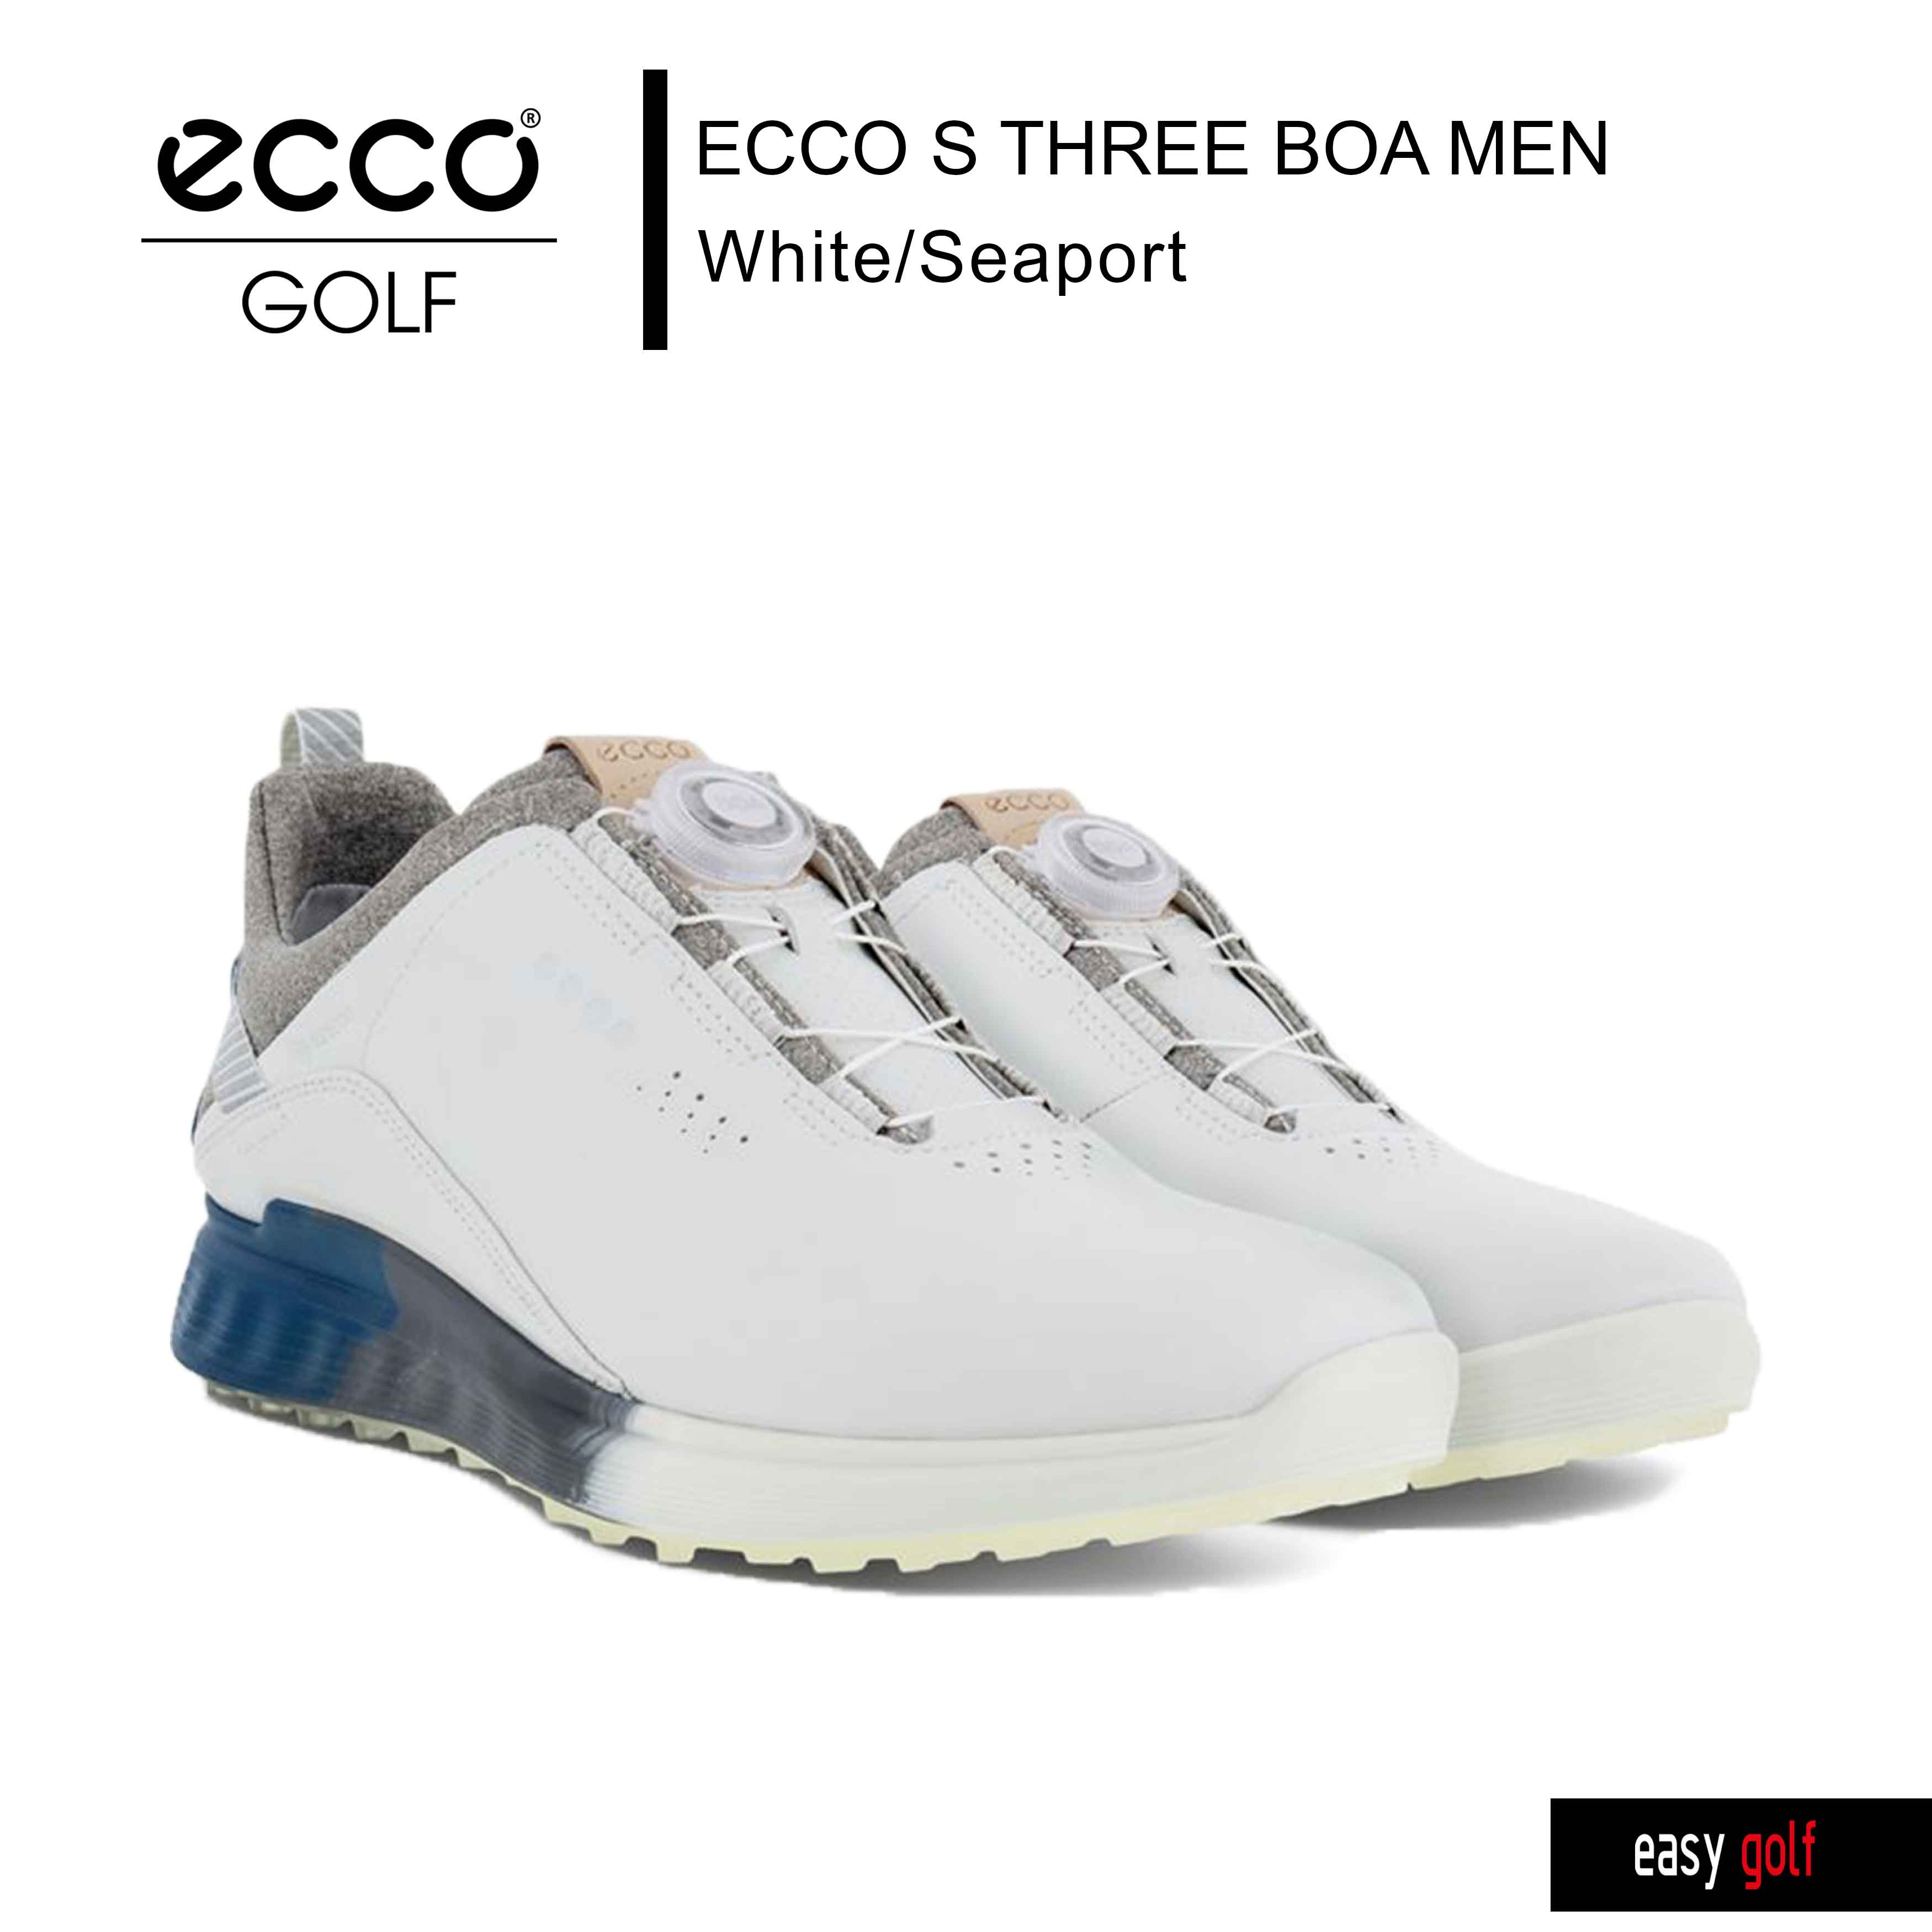 ECCO GOLF รองเท้ากอล์ฟผู้ชาย รองเท้ากีฬาชาย Golf Shoes รุ่น ECCO  S THREE BOA MEN สีขาว (White/Seaport)